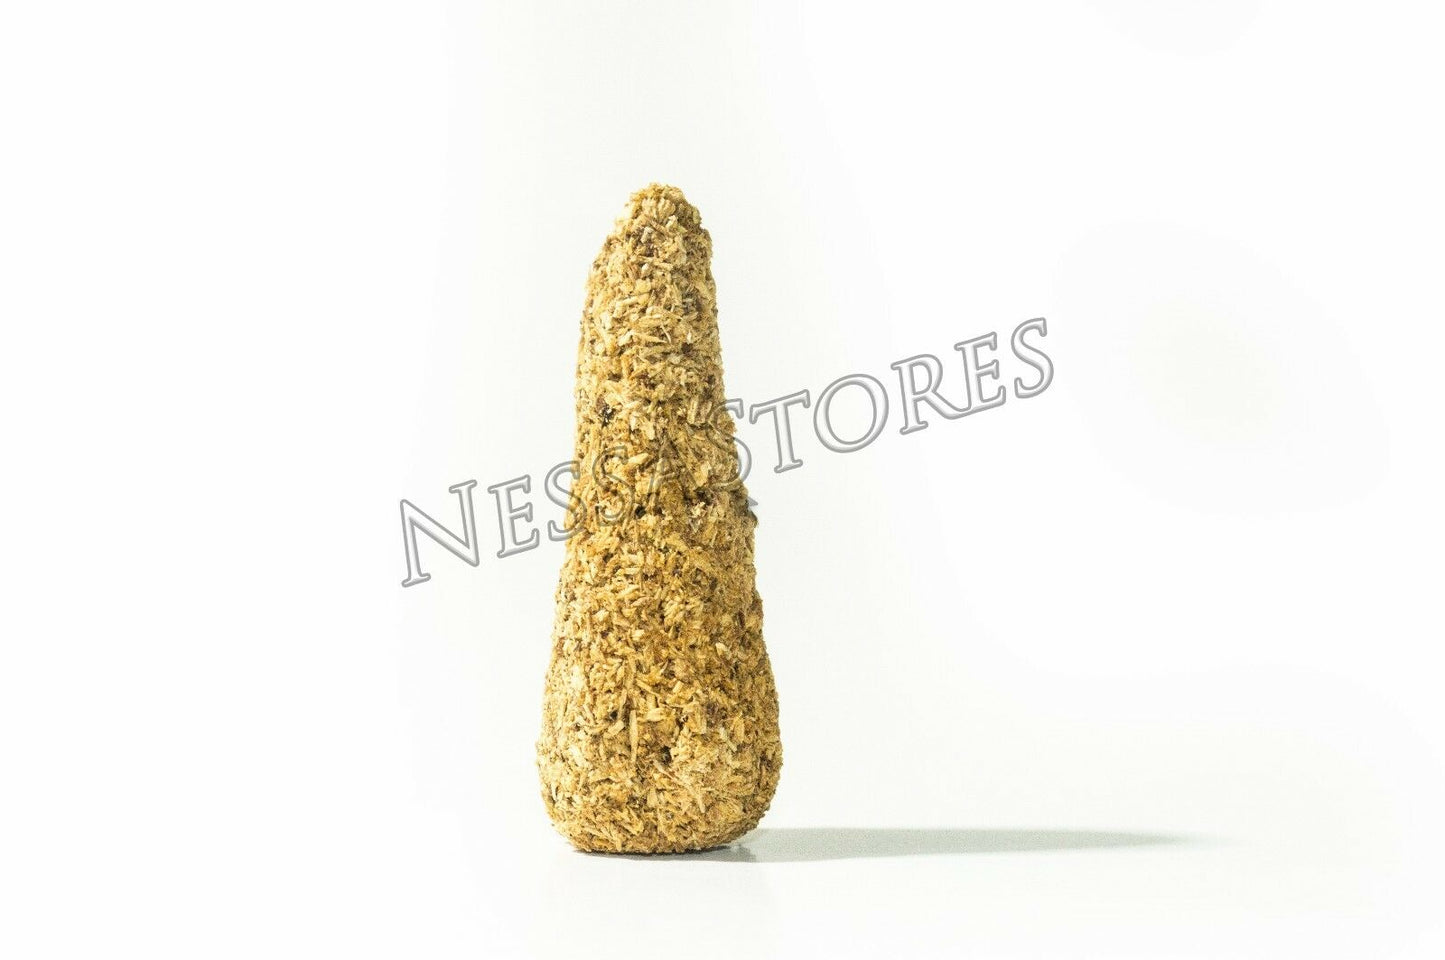 NessaStores Palo Santo Holy Wood Incense Cones 1 1/2" - 2" (5 pcs) #JC-063